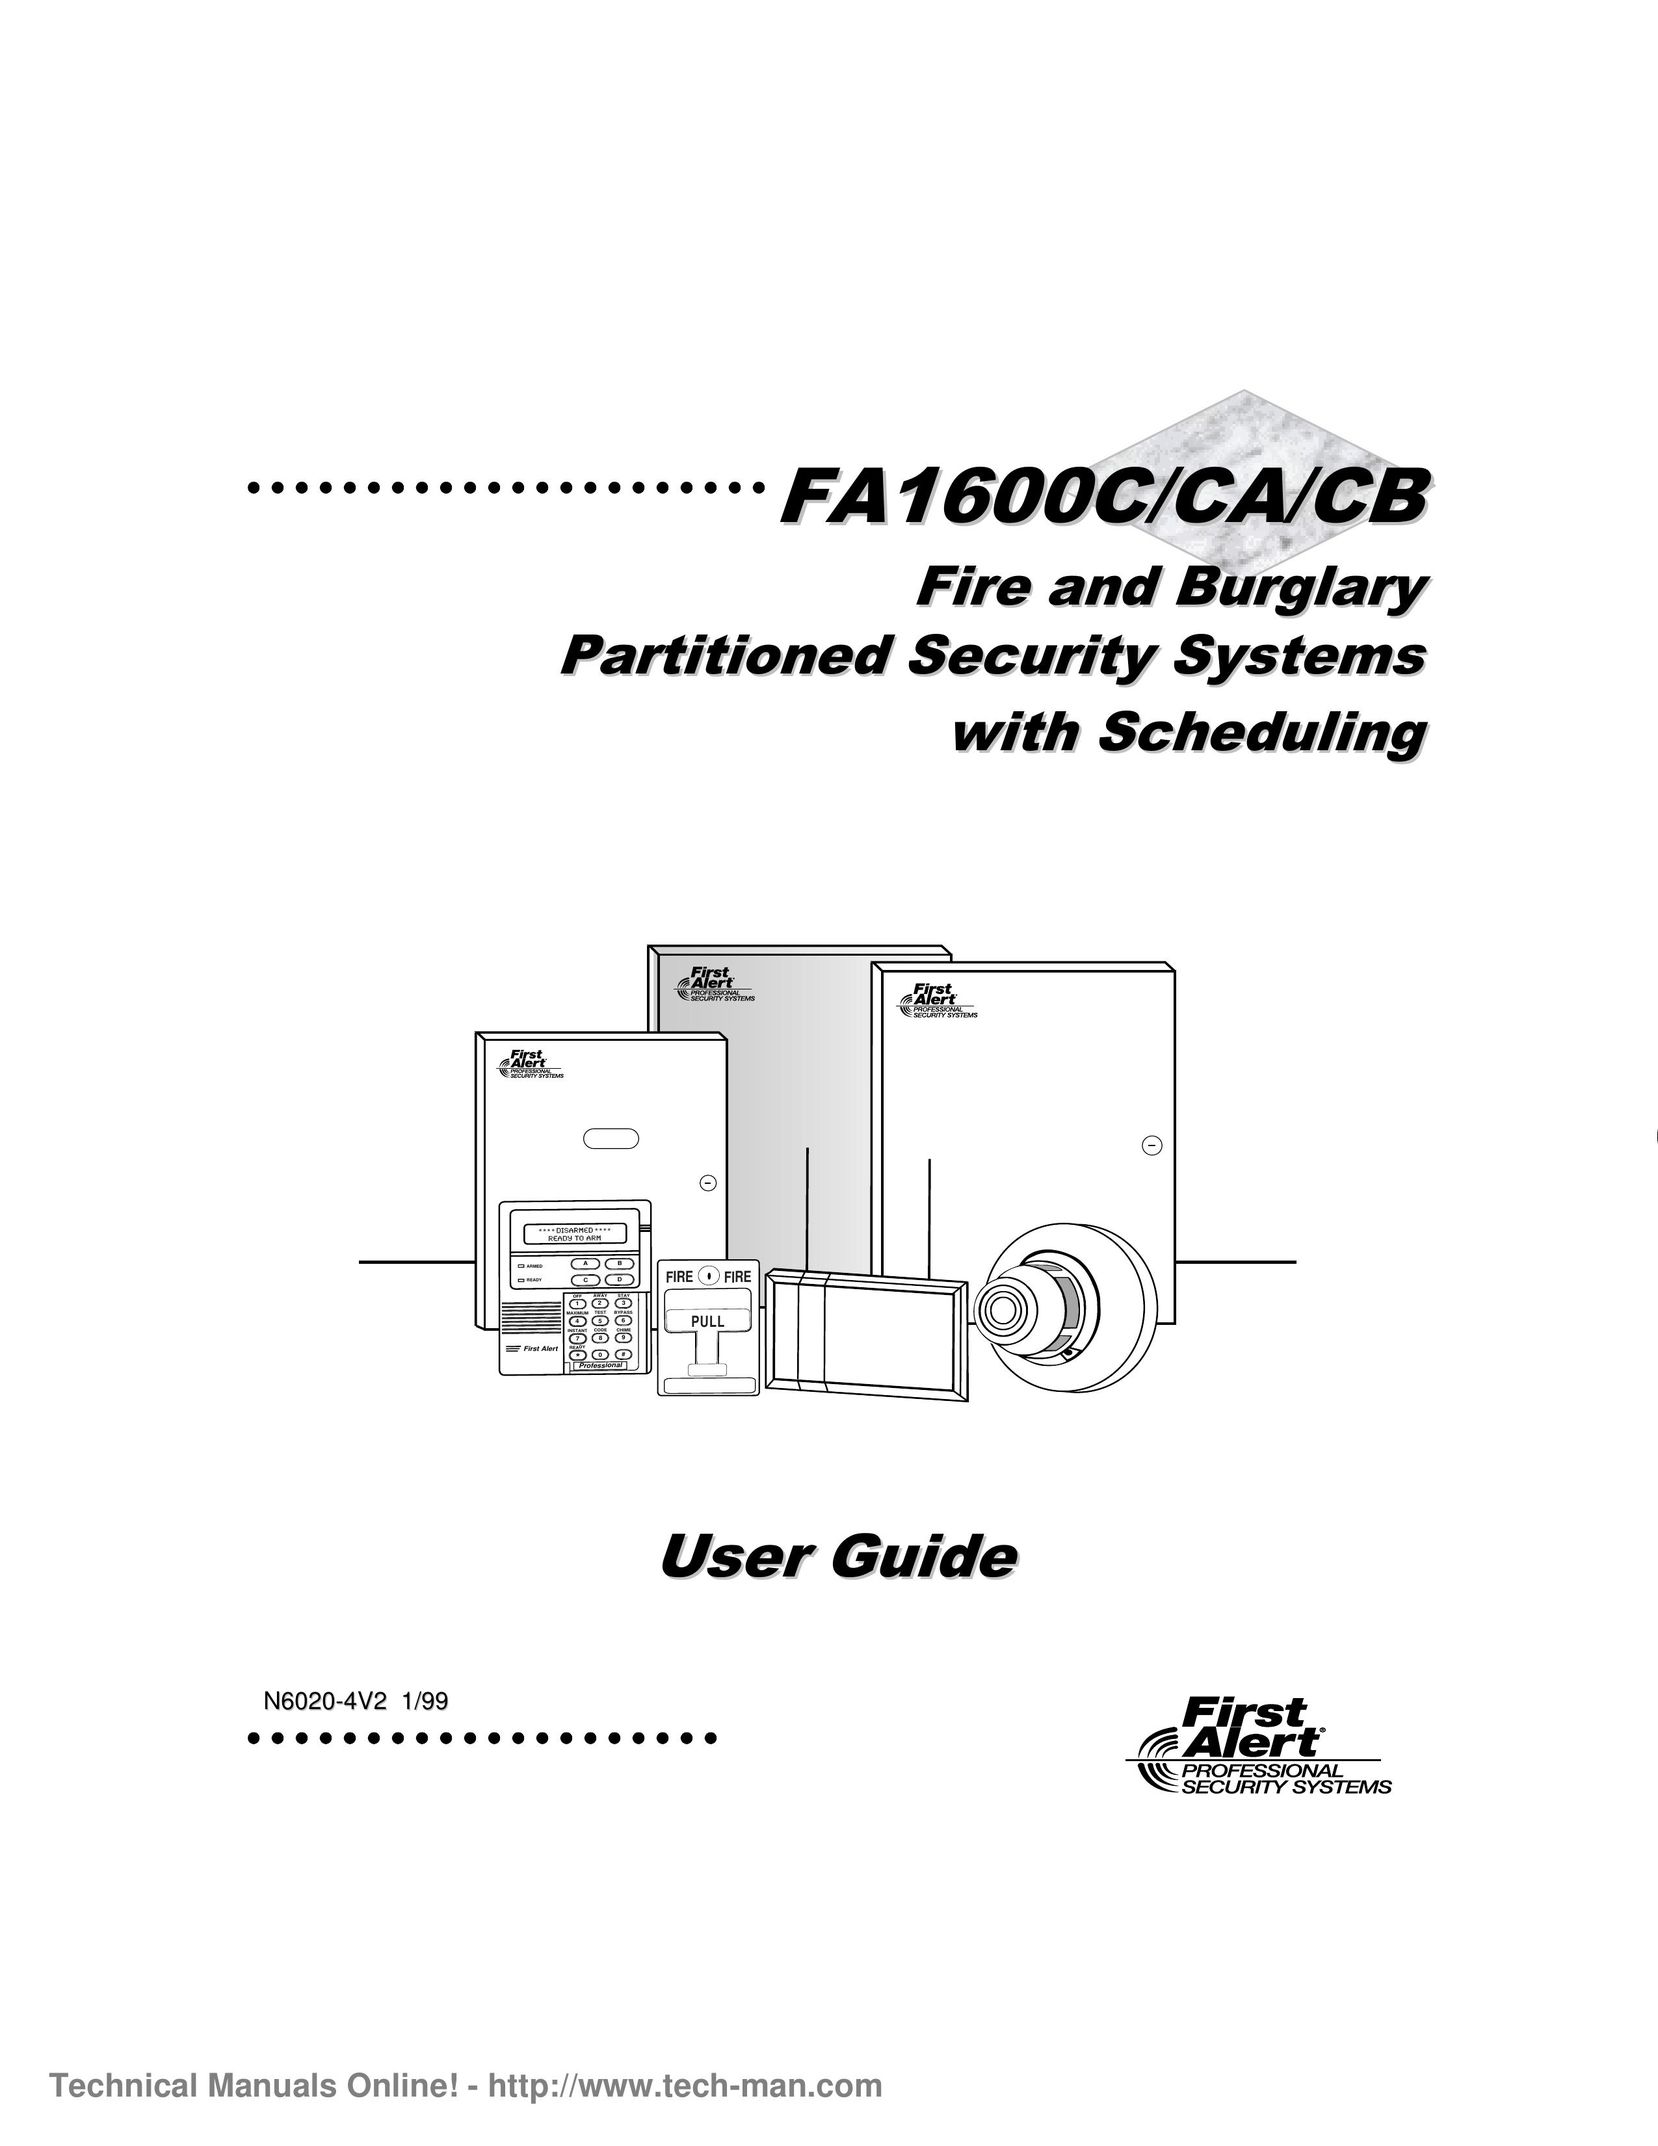 First Alert FA1600C/CA/CB Home Security System User Manual